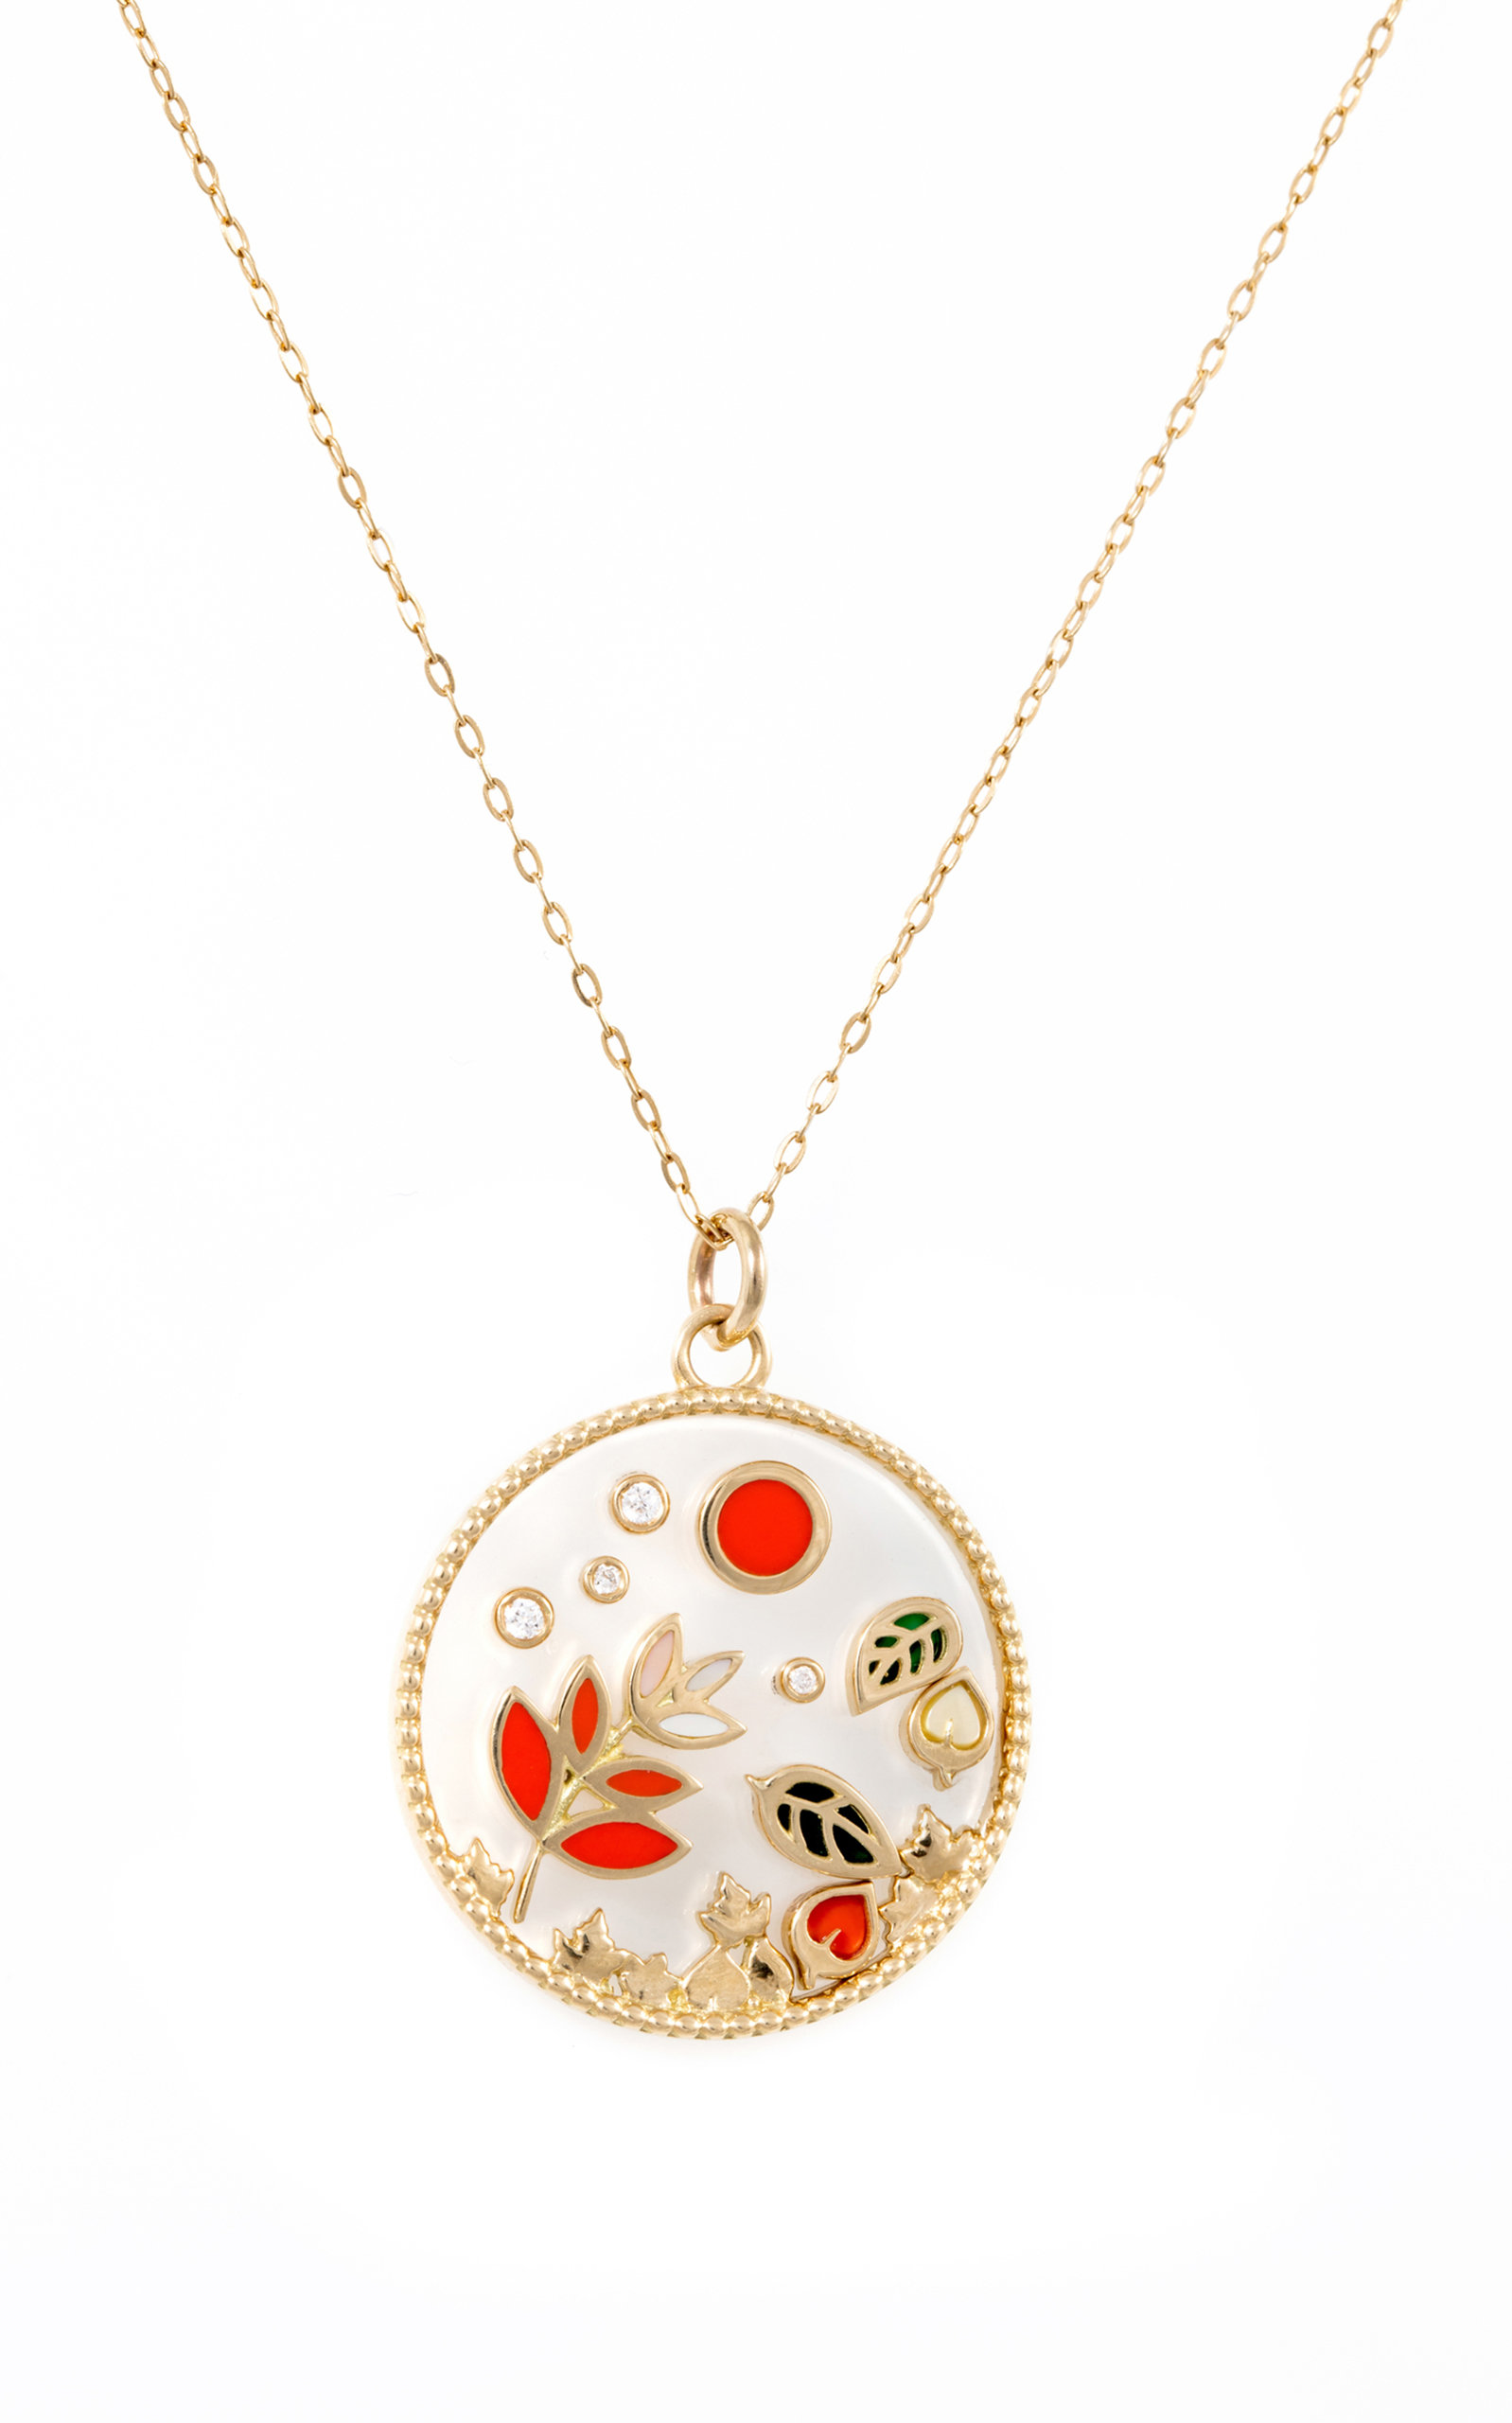 L'Atelier Nawbar Women's Love Autumn 18K Yellow Gold Pendant Necklace